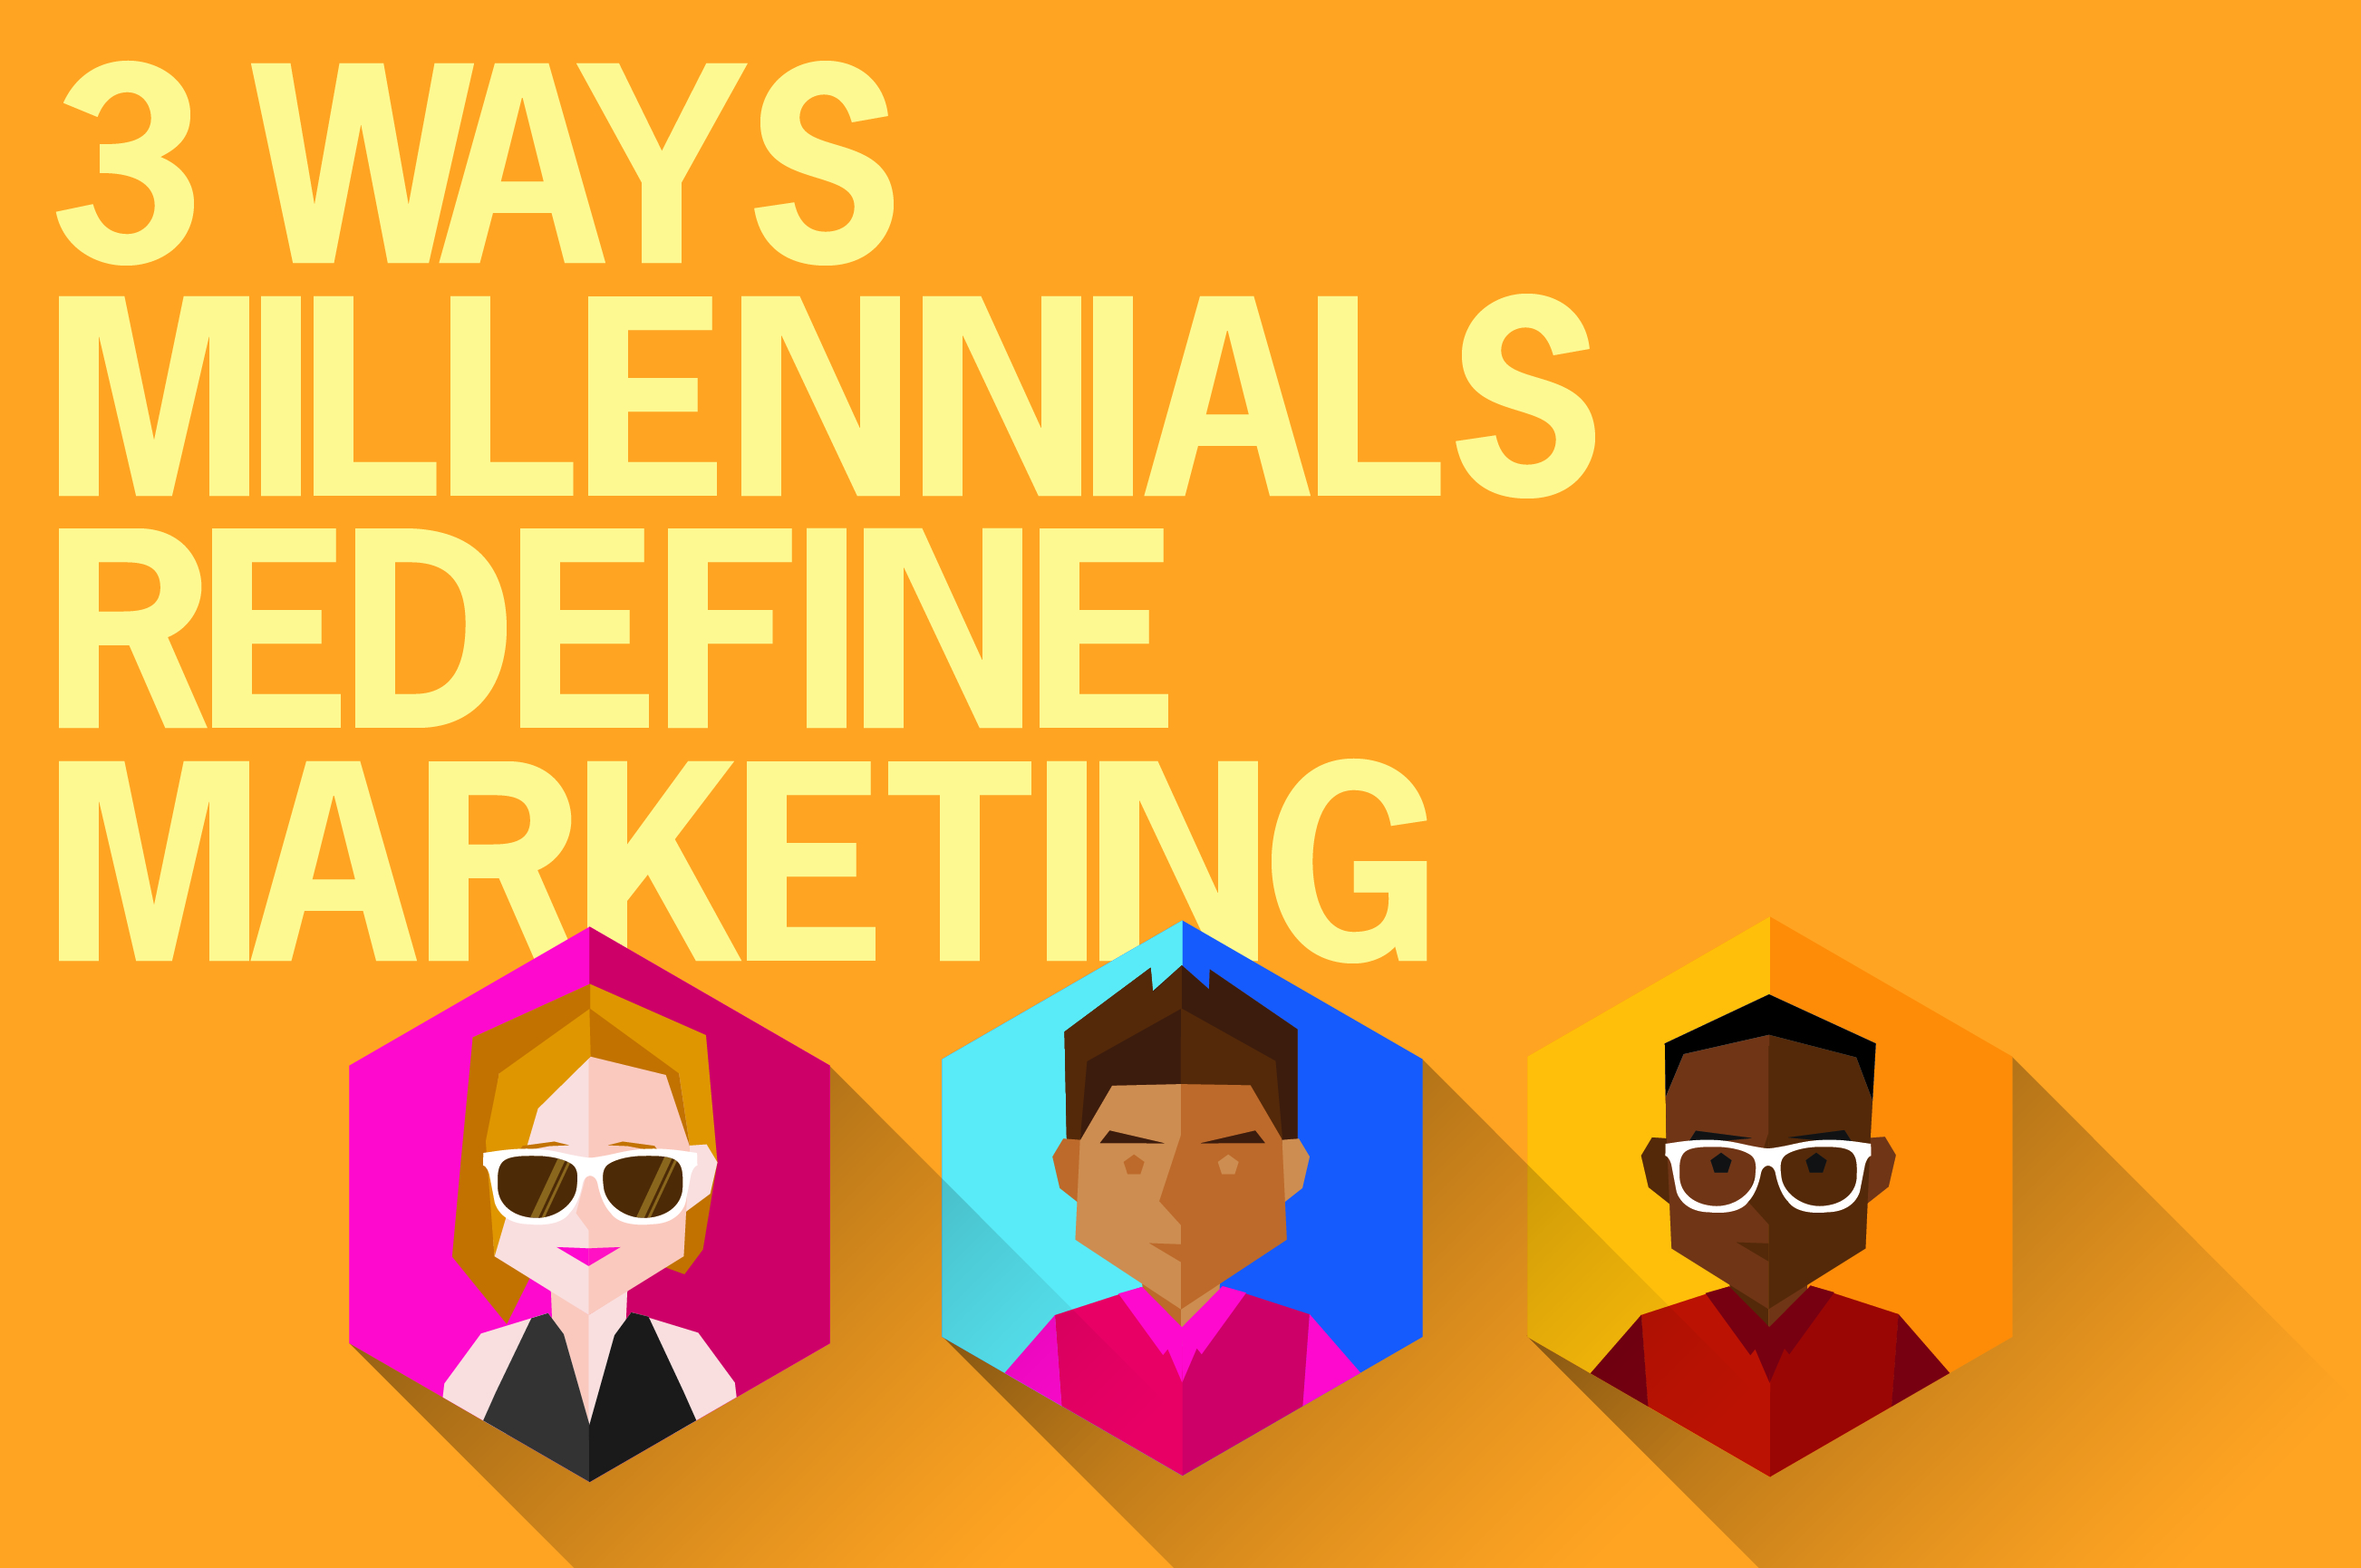 3 Ways millennials shape marketing_Images_012517-01